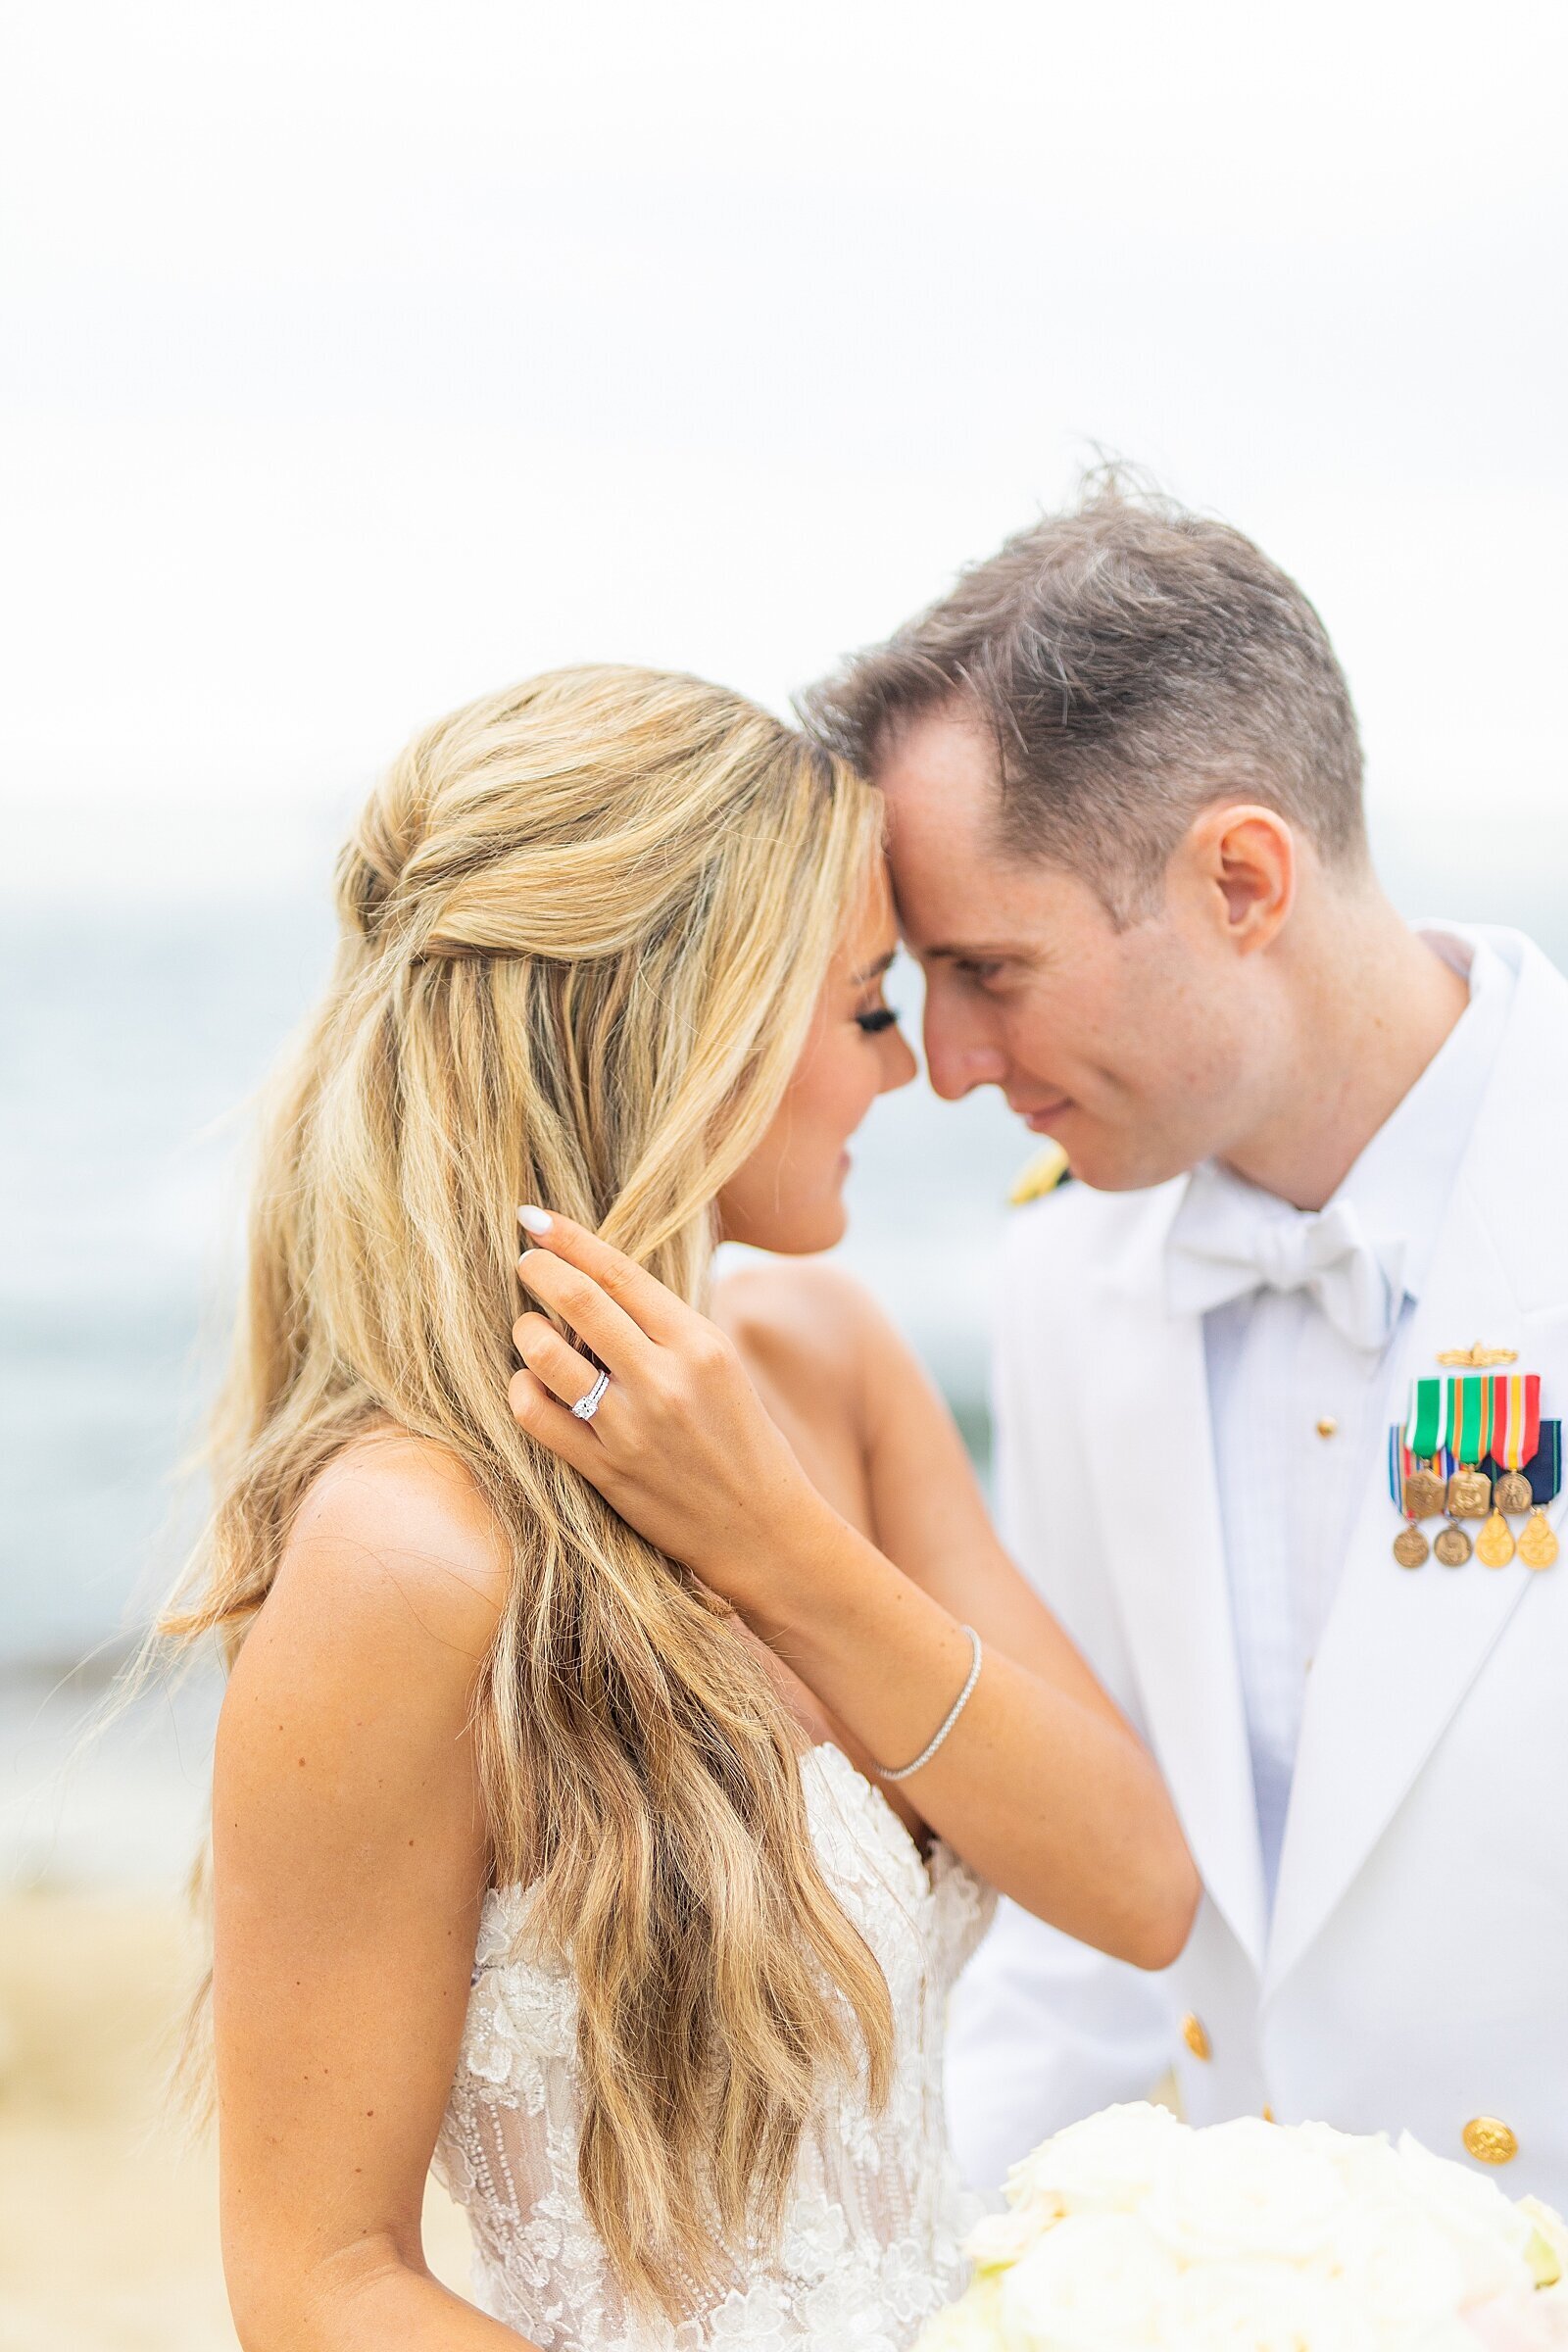 Bride and groom at La Jolla beach by Sherr Weddings.